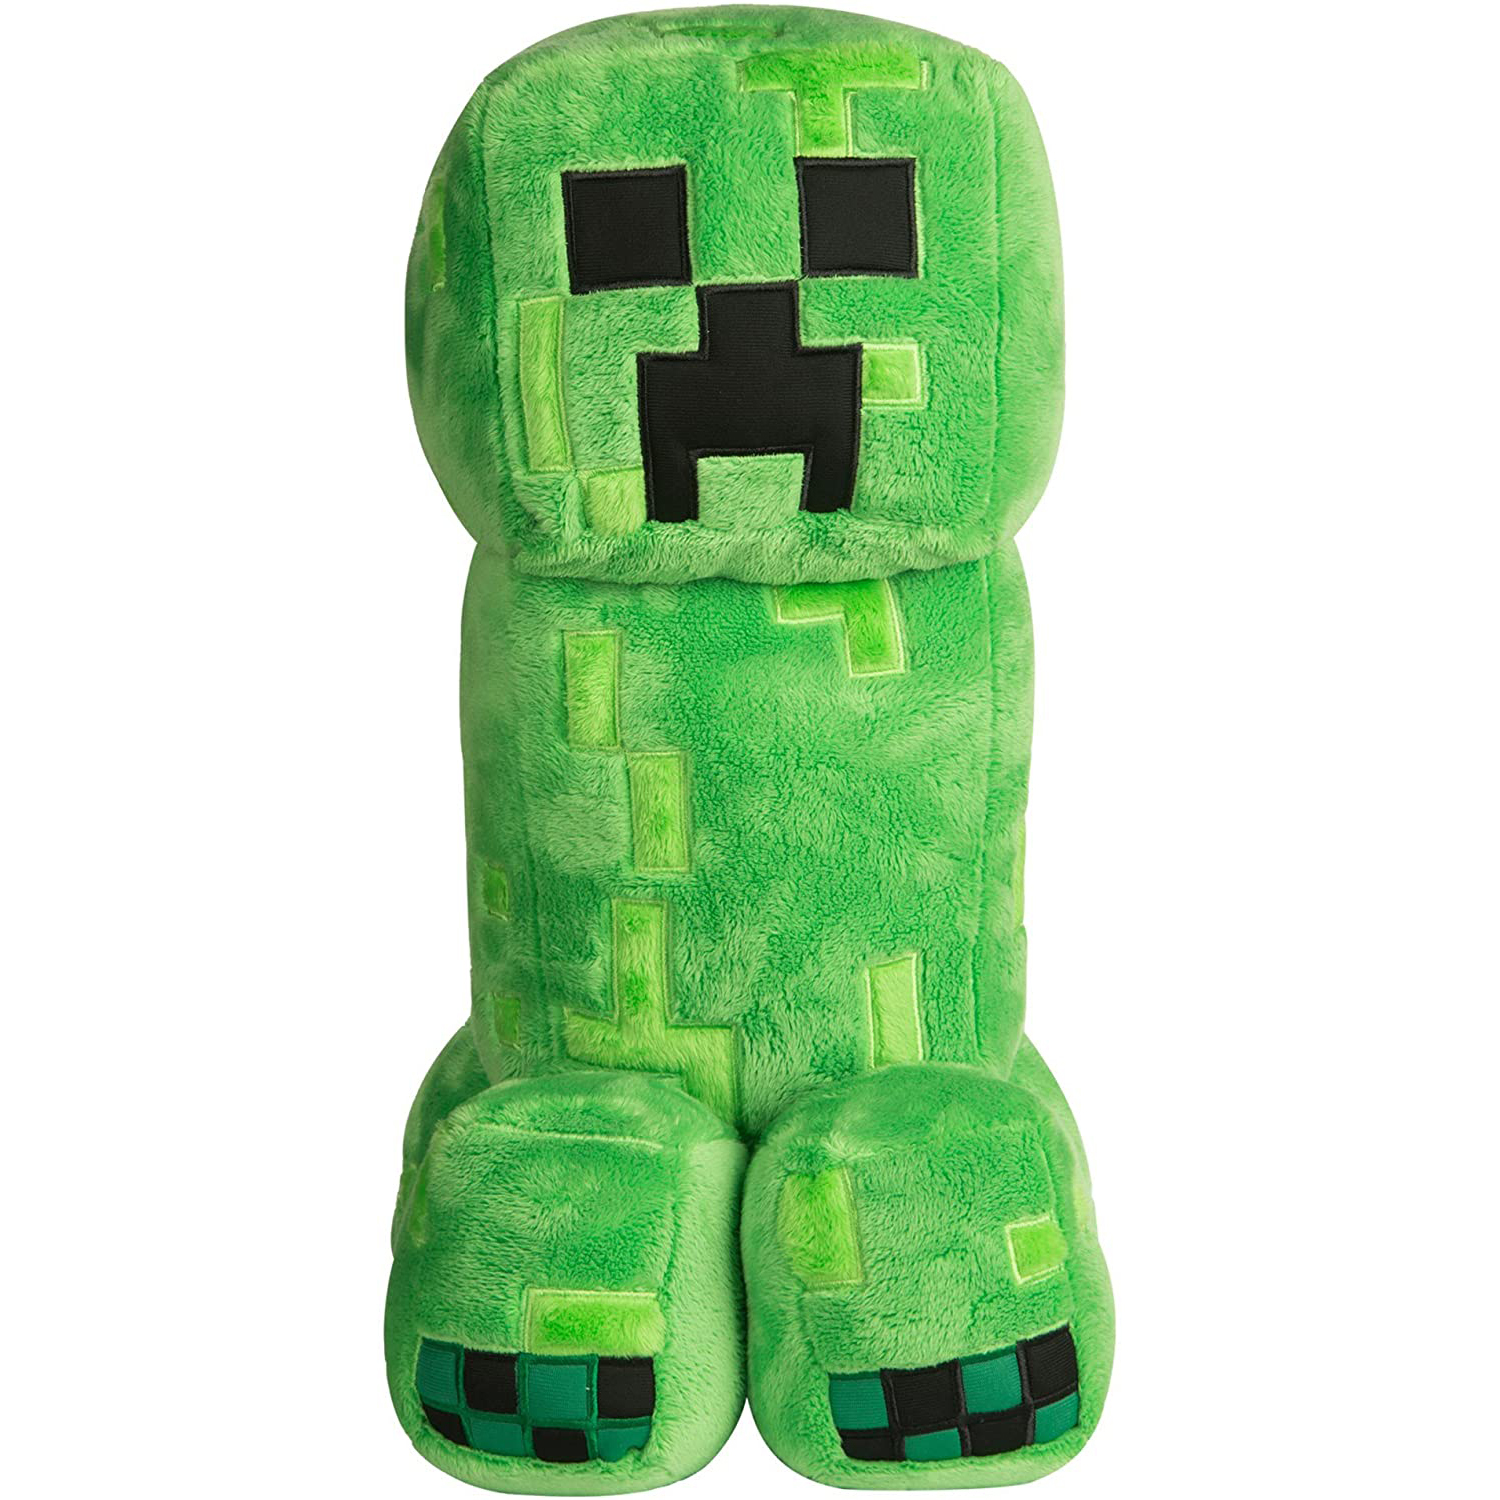 Minecraft Plush Toy